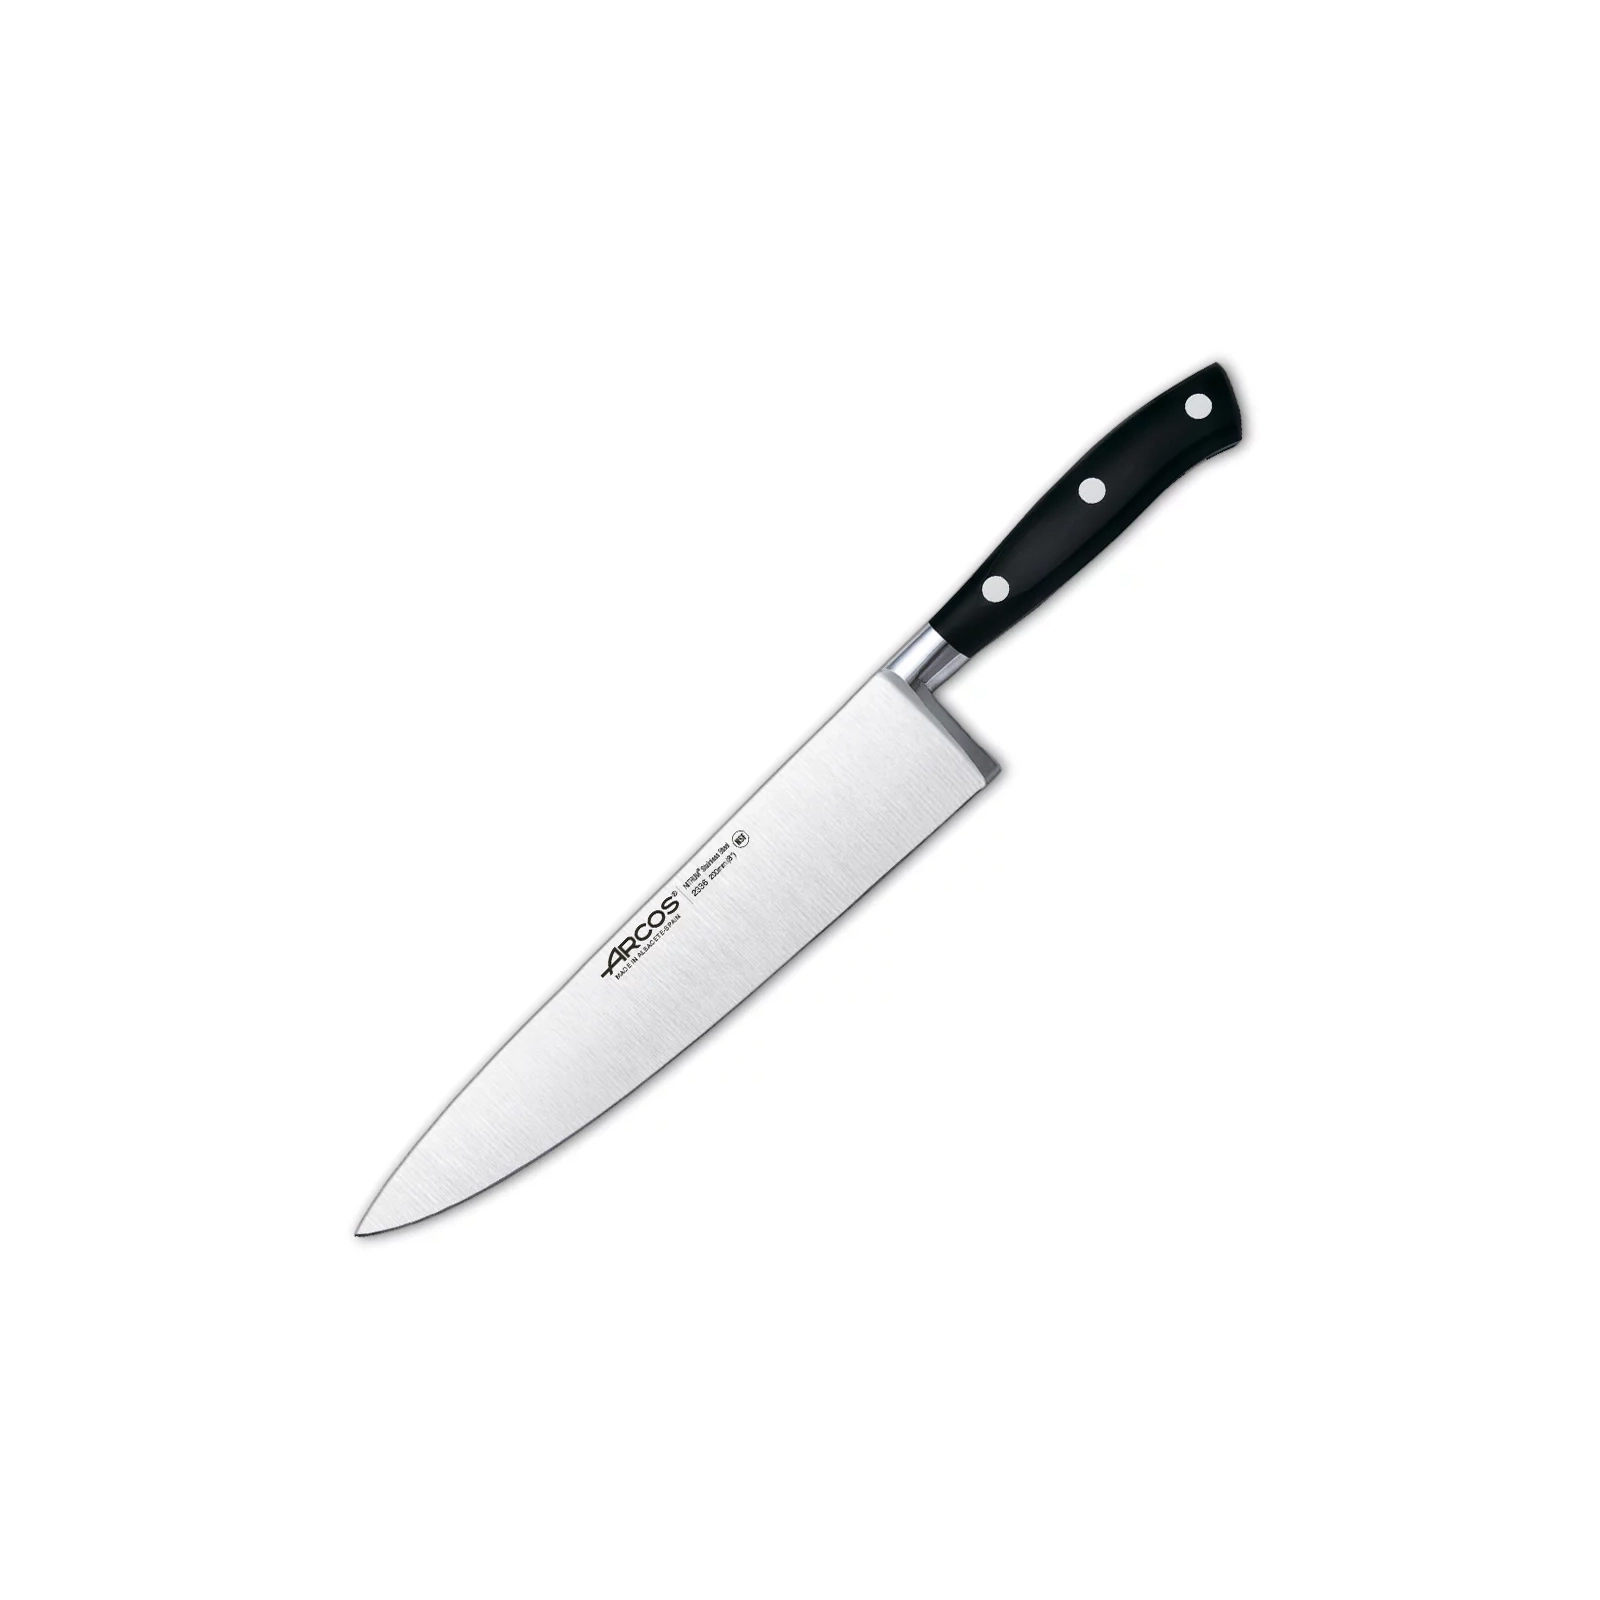 Кухонный нож Arcos Riviera поварський 200 мм (233600)